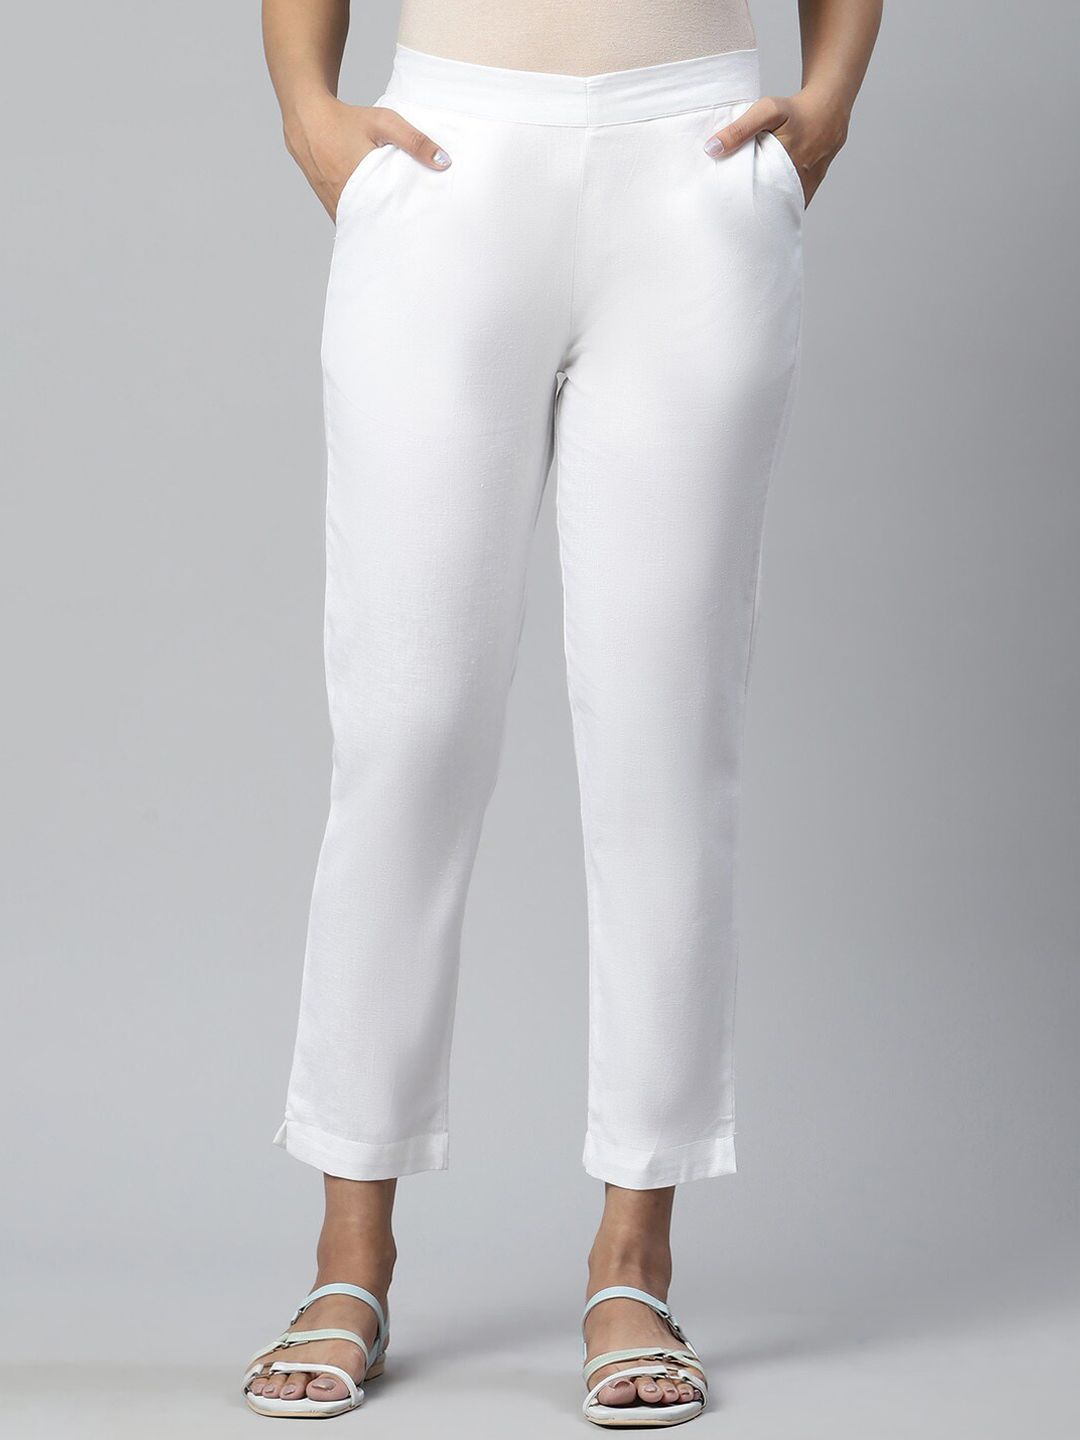 AURELIA Women Regular Fit White Trousers Price in India